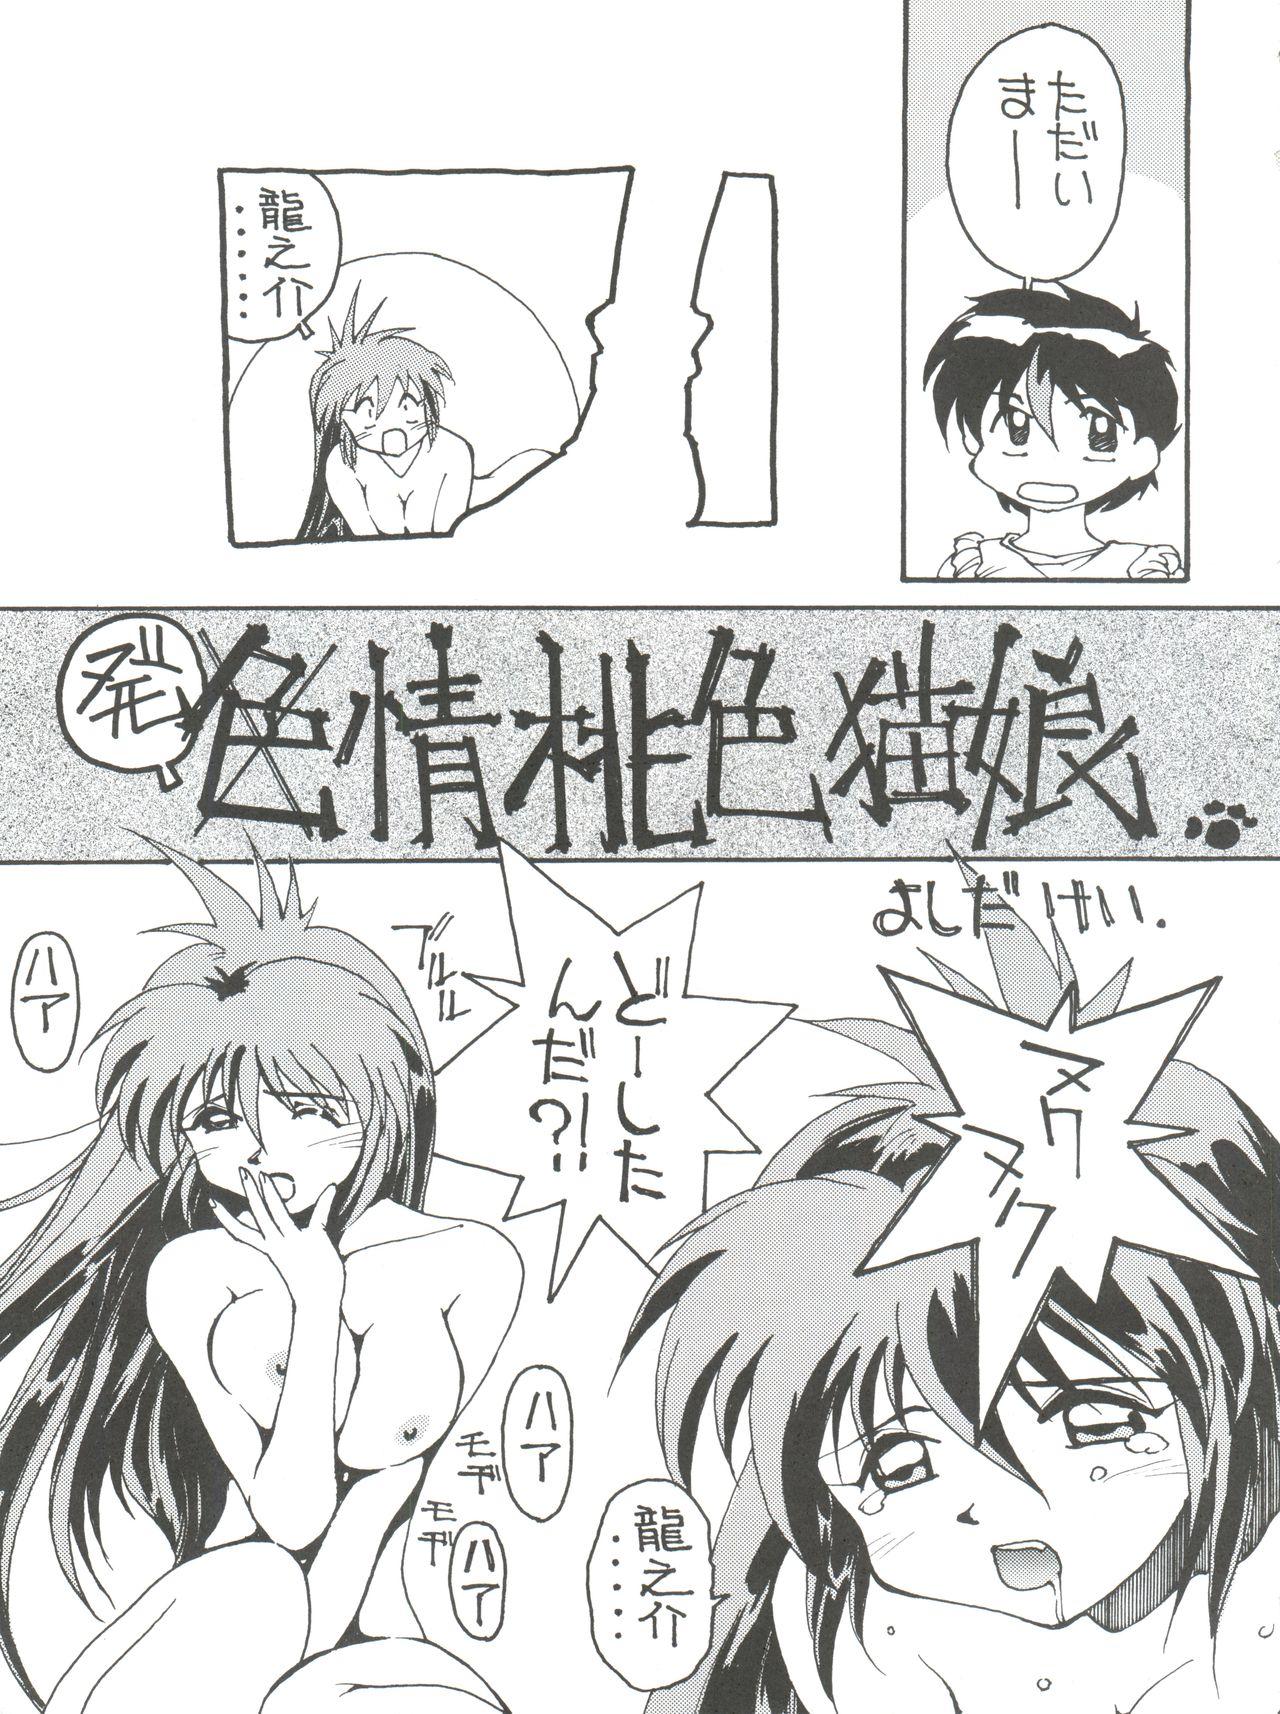 8teenxxx Toufuya Rokuchou - Sailor moon Tenchi muyo Ghost sweeper mikami All purpose cultural cat girl nuku nuku Deflowered - Page 9